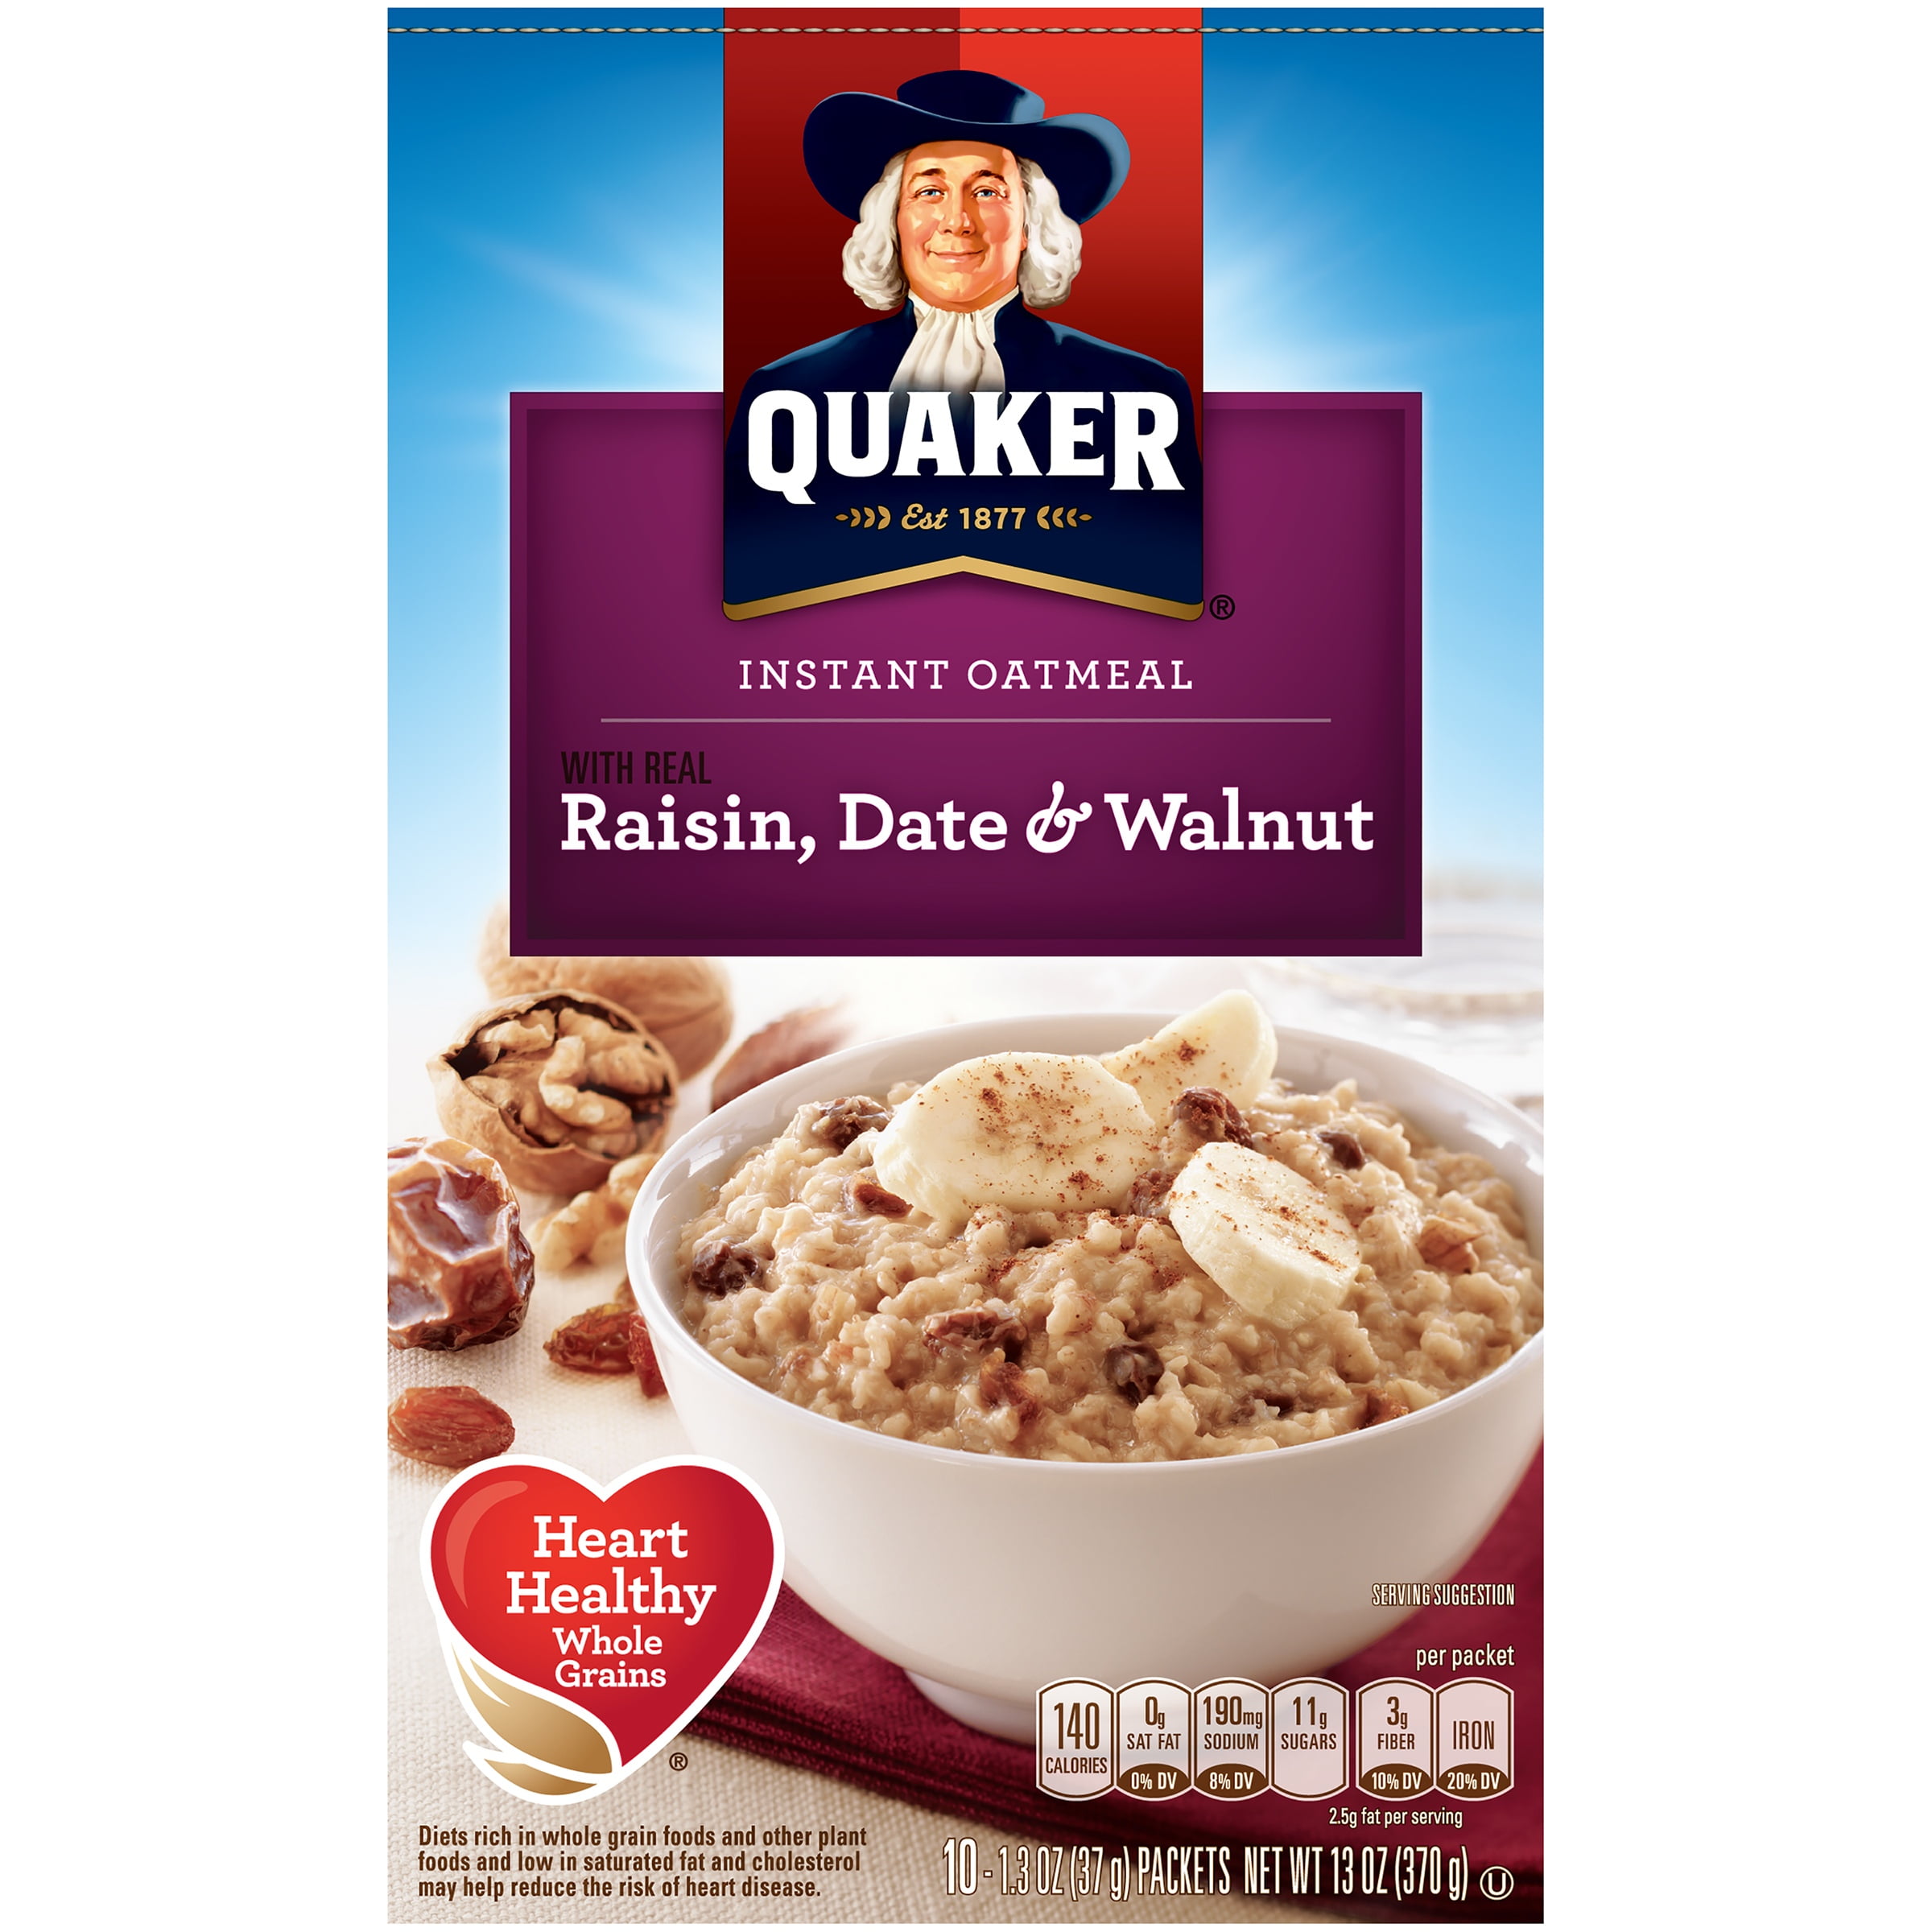 quaker instant oatmeal recall